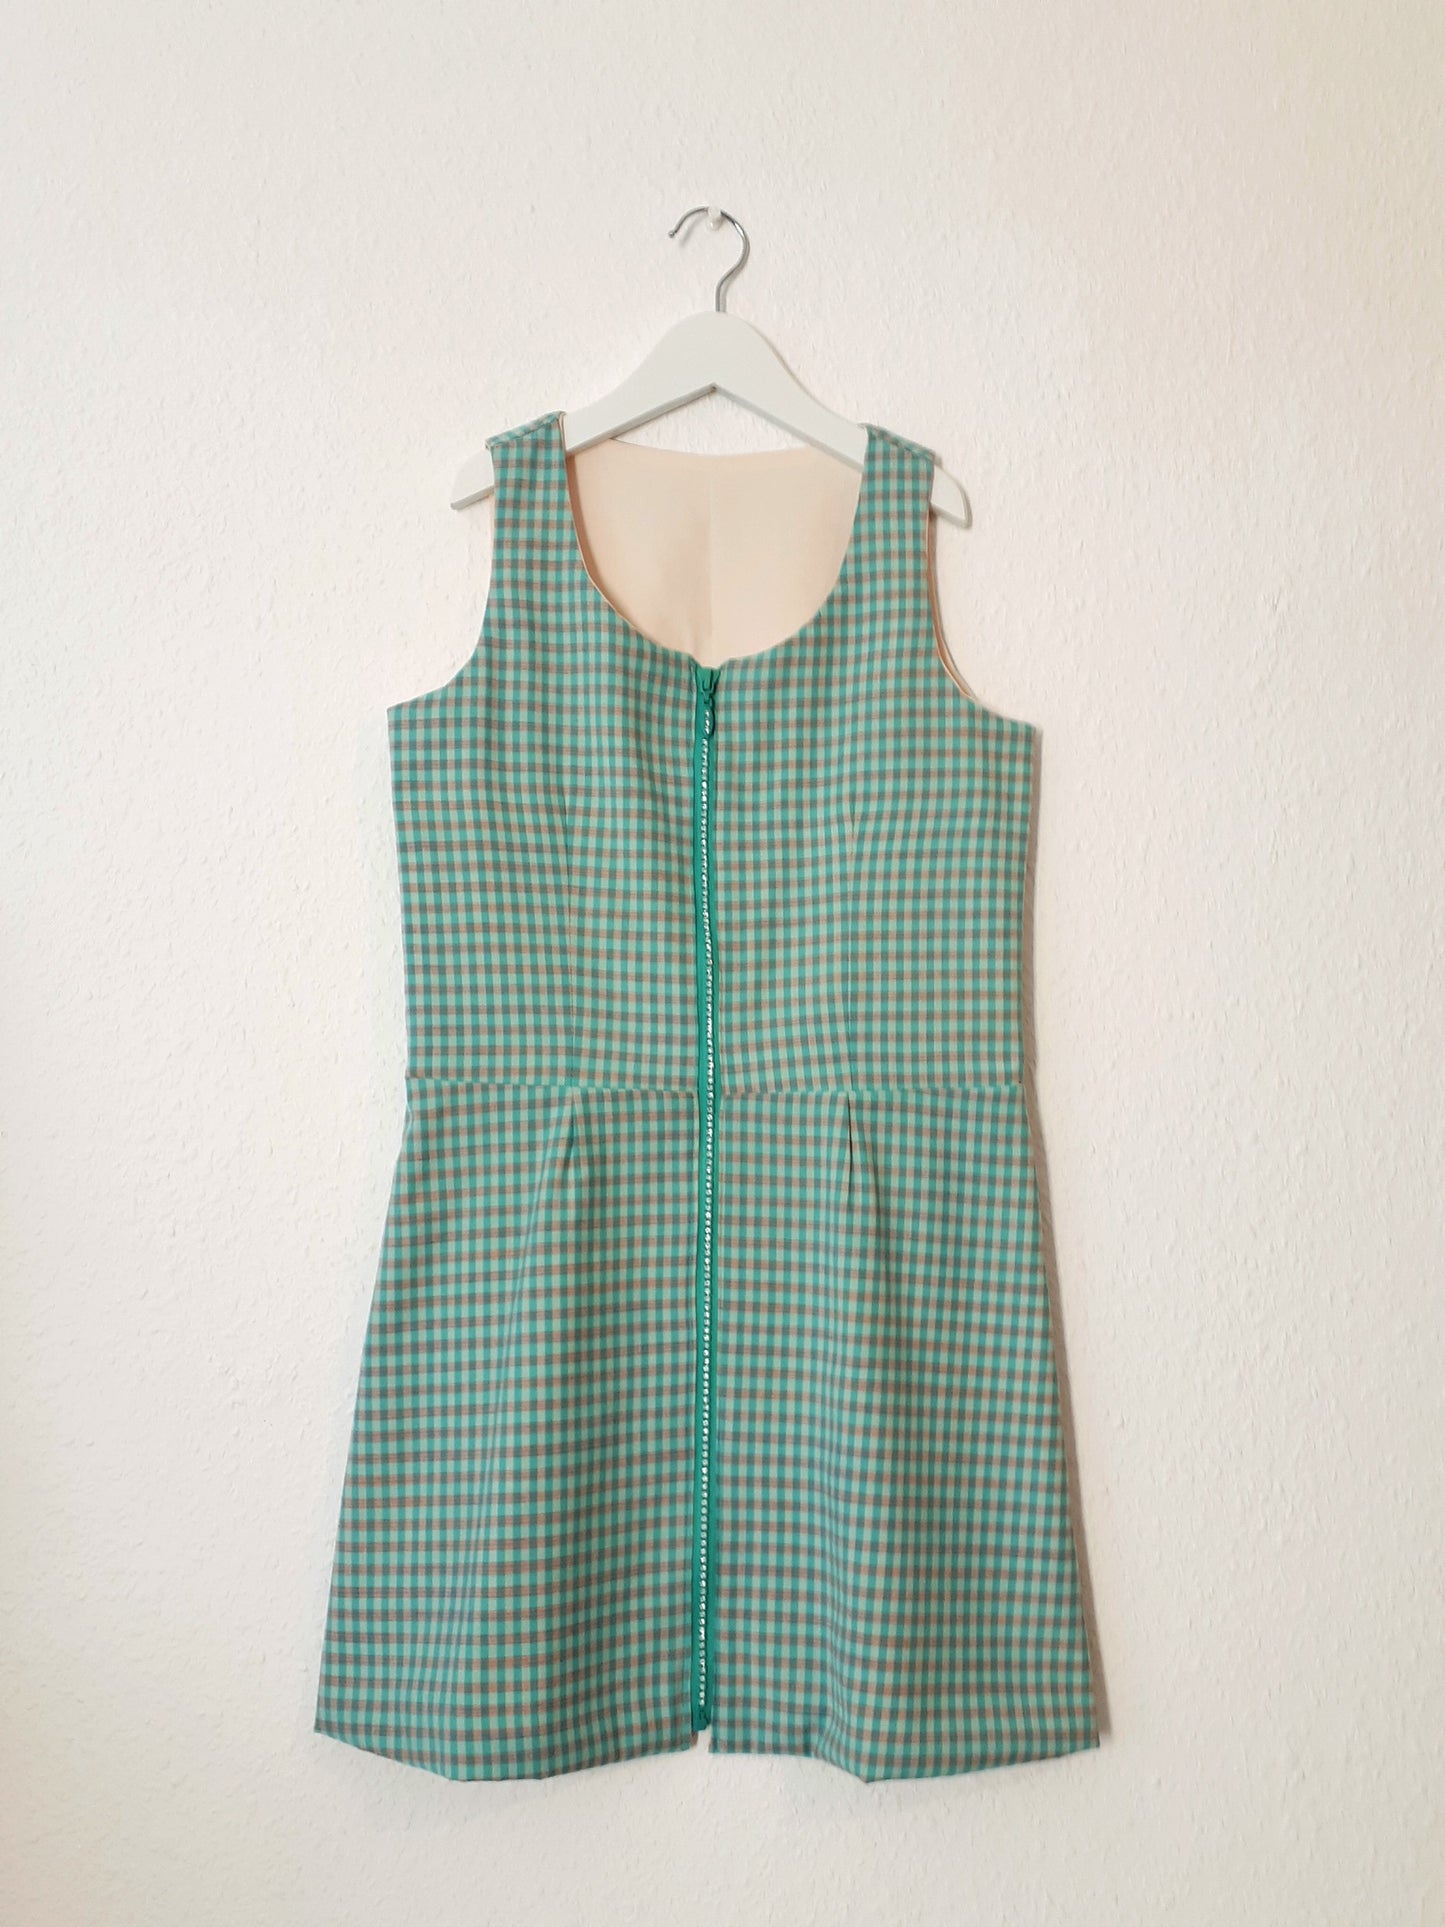 Girls pinafore dress (size 10 years)